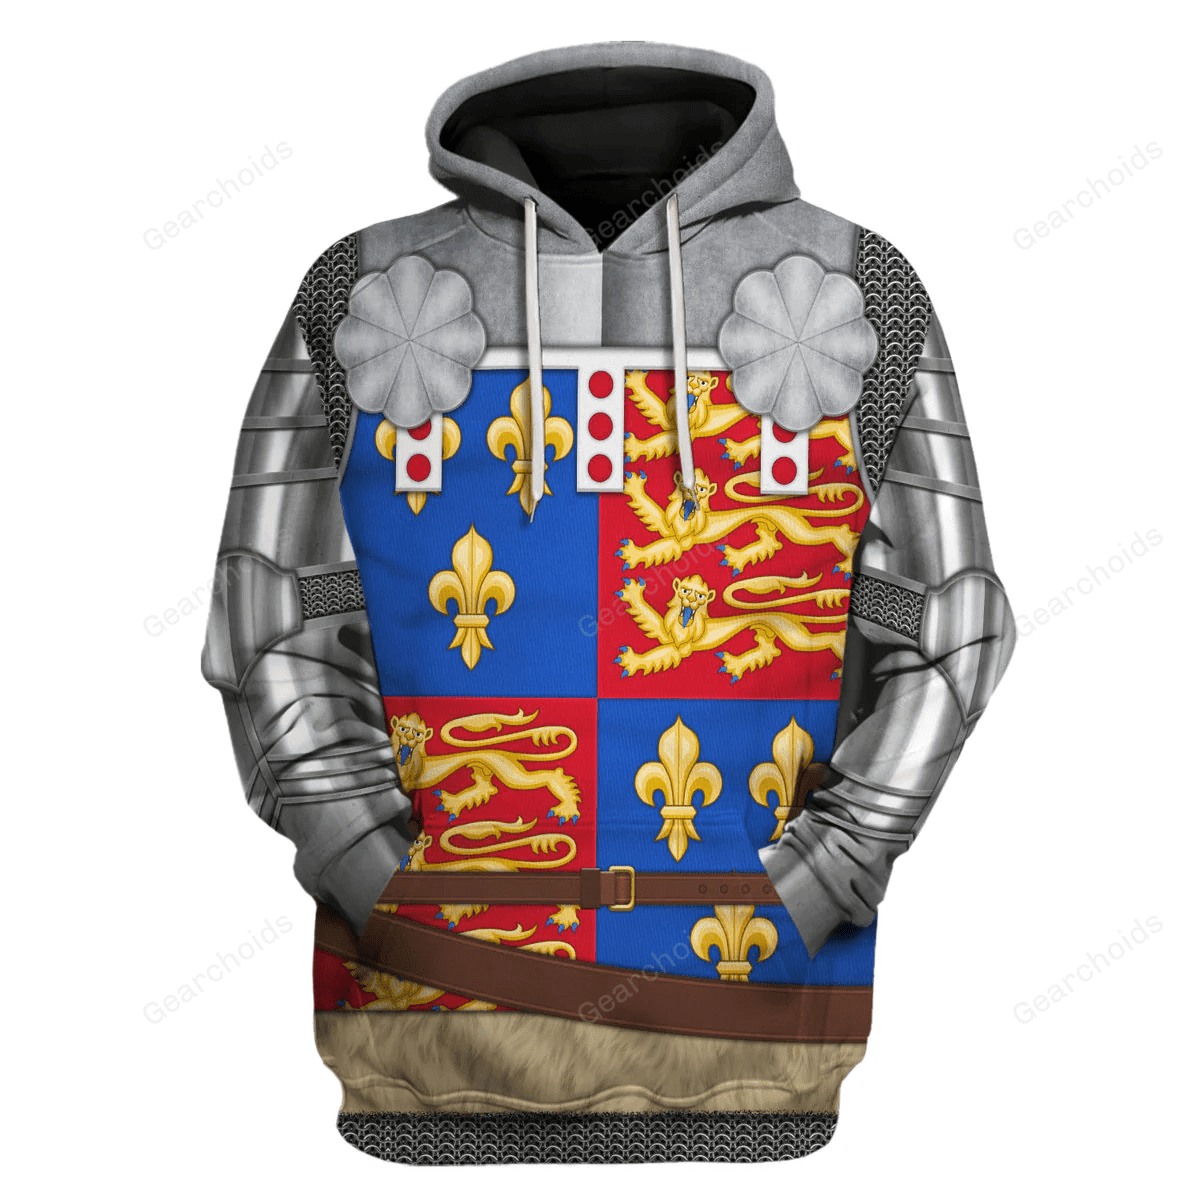 Gearchoids Richard of York, 3rd Duke of York Amour Knights Costume Hoodie Sweatshirt T-Shirt Tracksuit